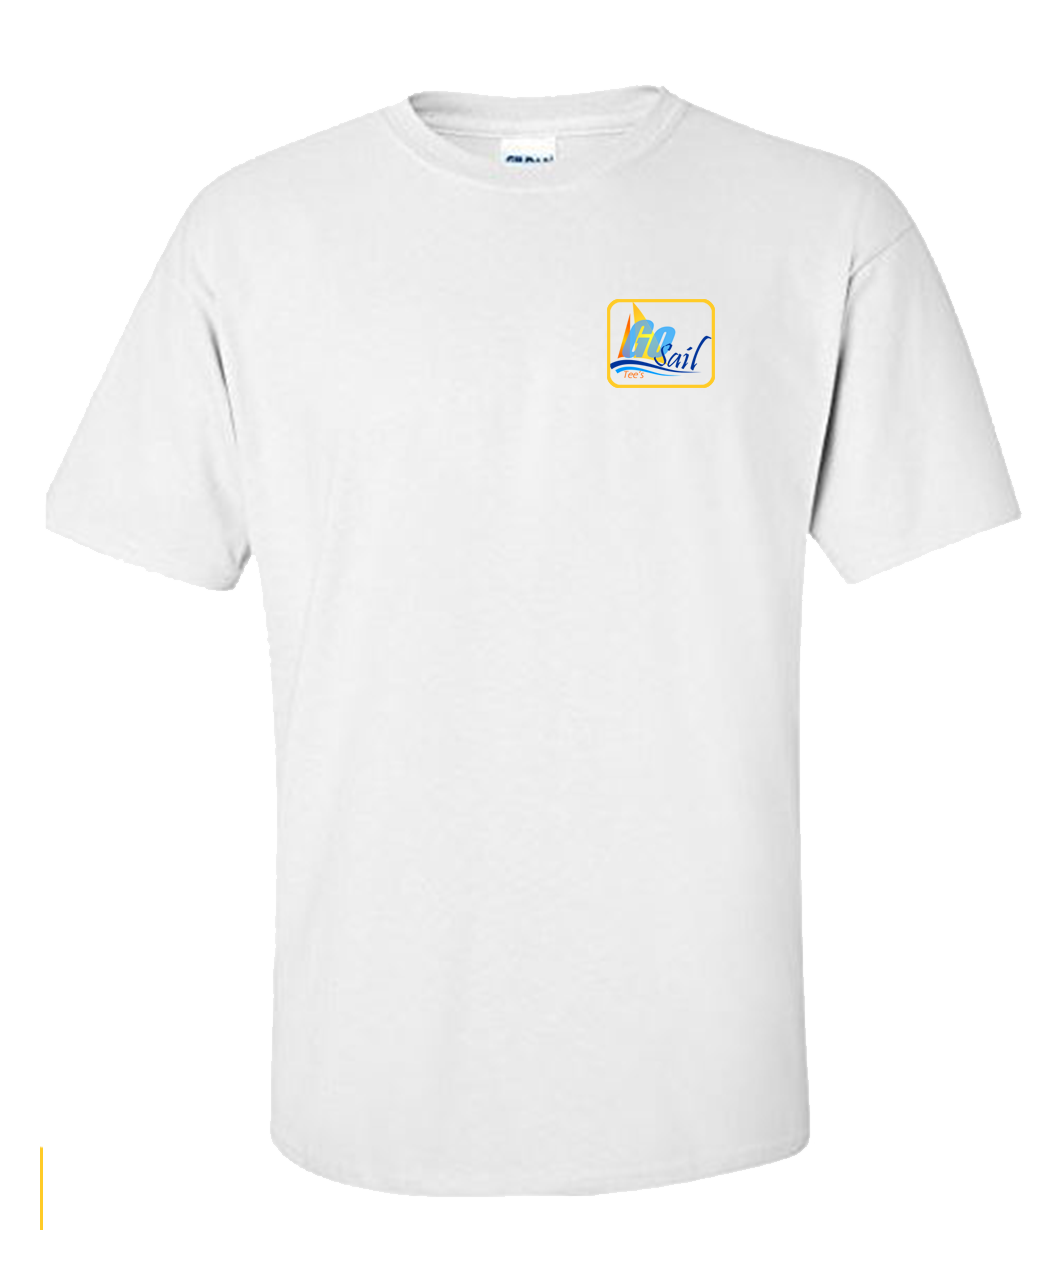 Hi Tide Unisex T-Shirt